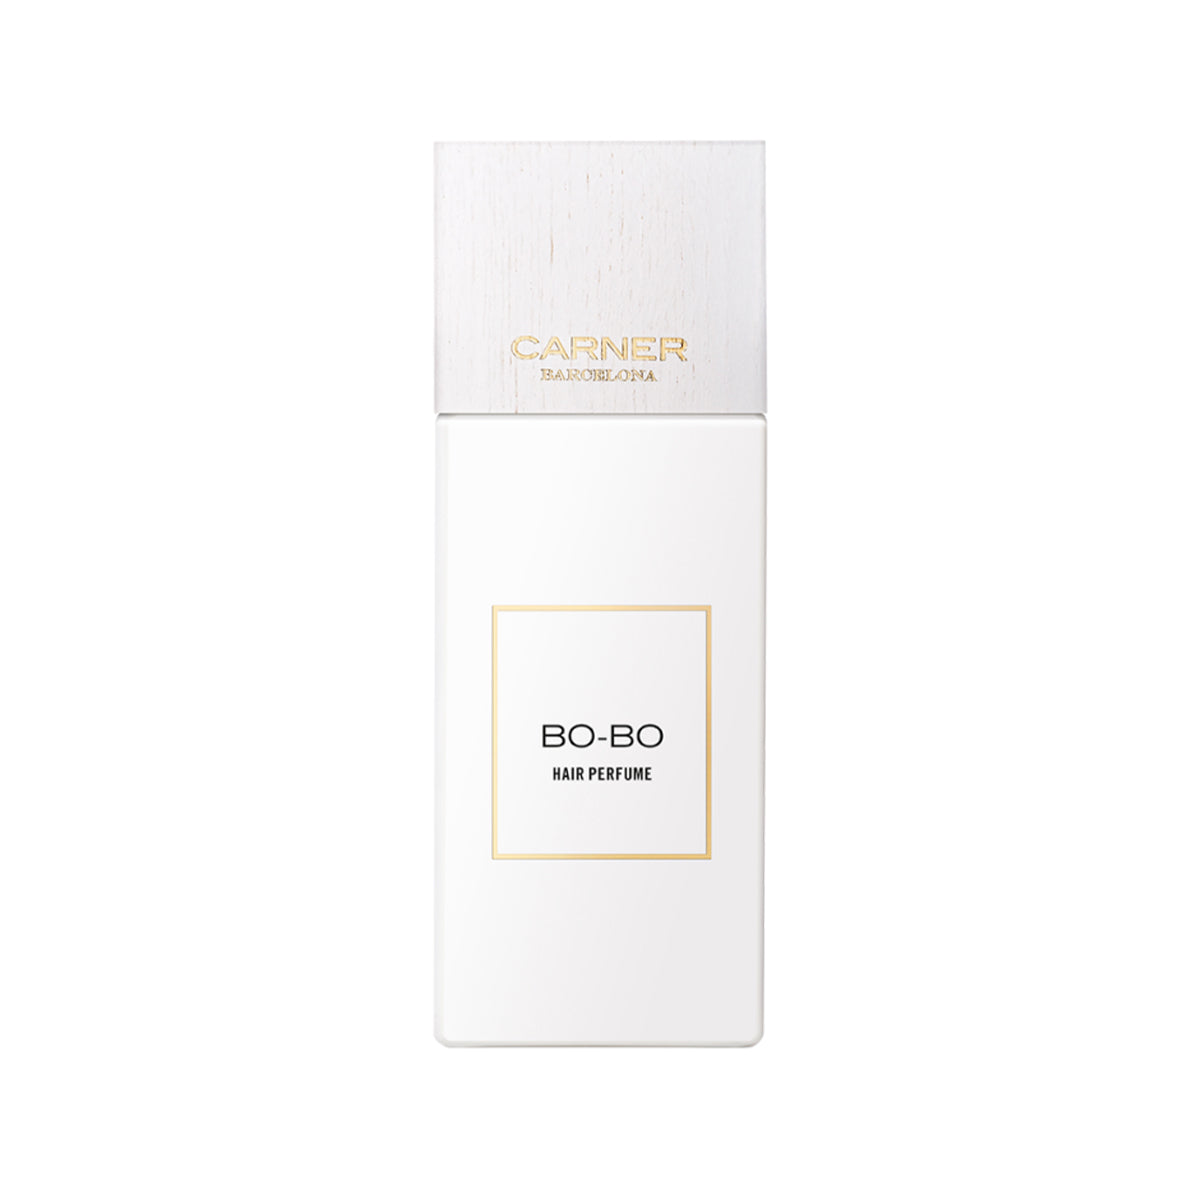 Bo-Bo - Carner Barcelona - Hair Perfume 50ml